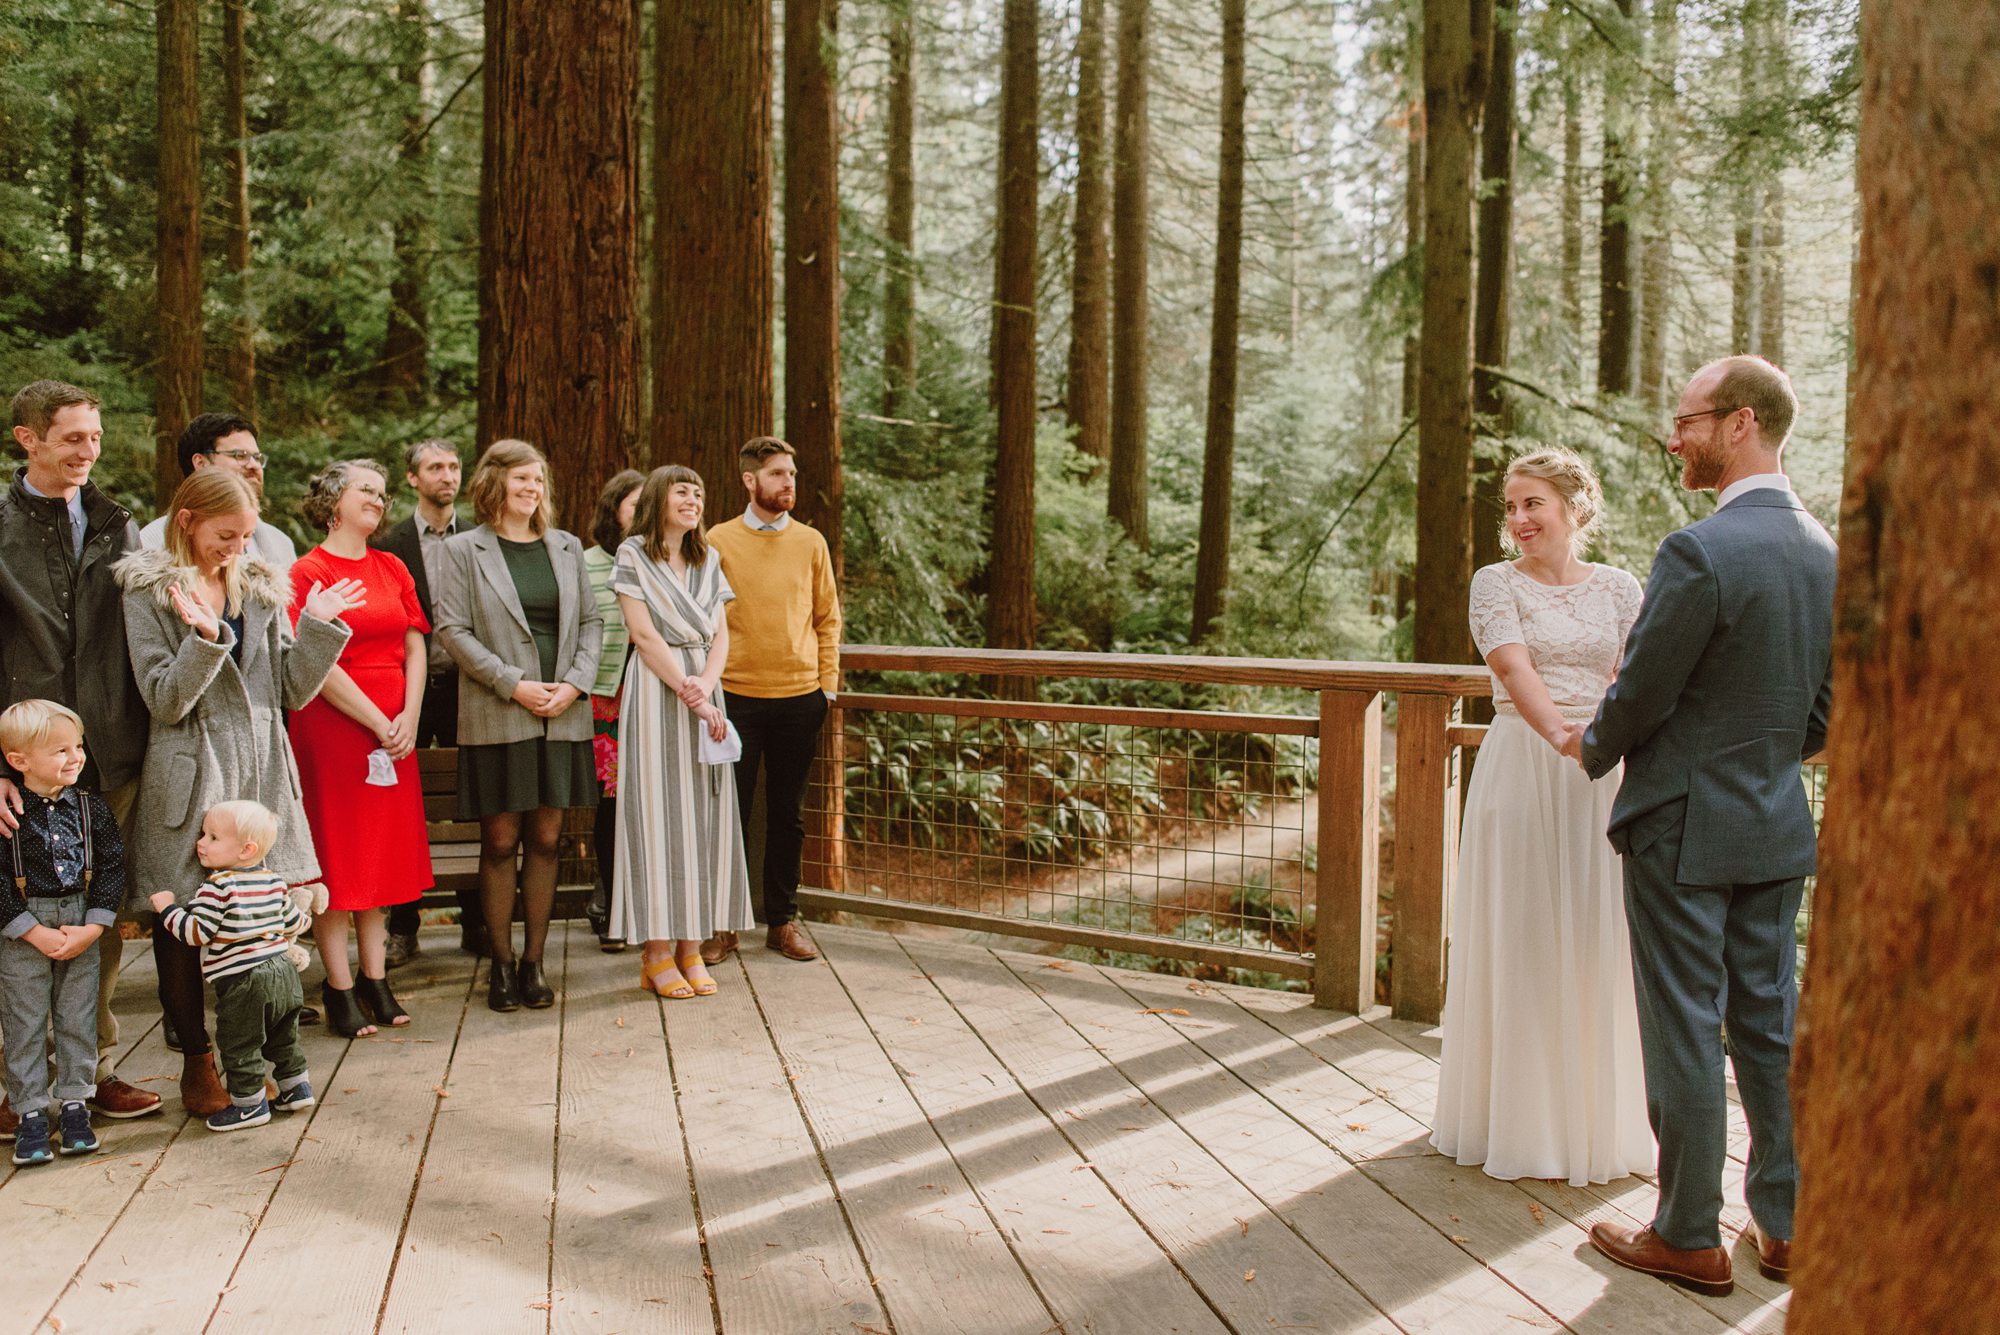 Wedding ceremony on the Hoyt Arboretum Deck in Portland, OR